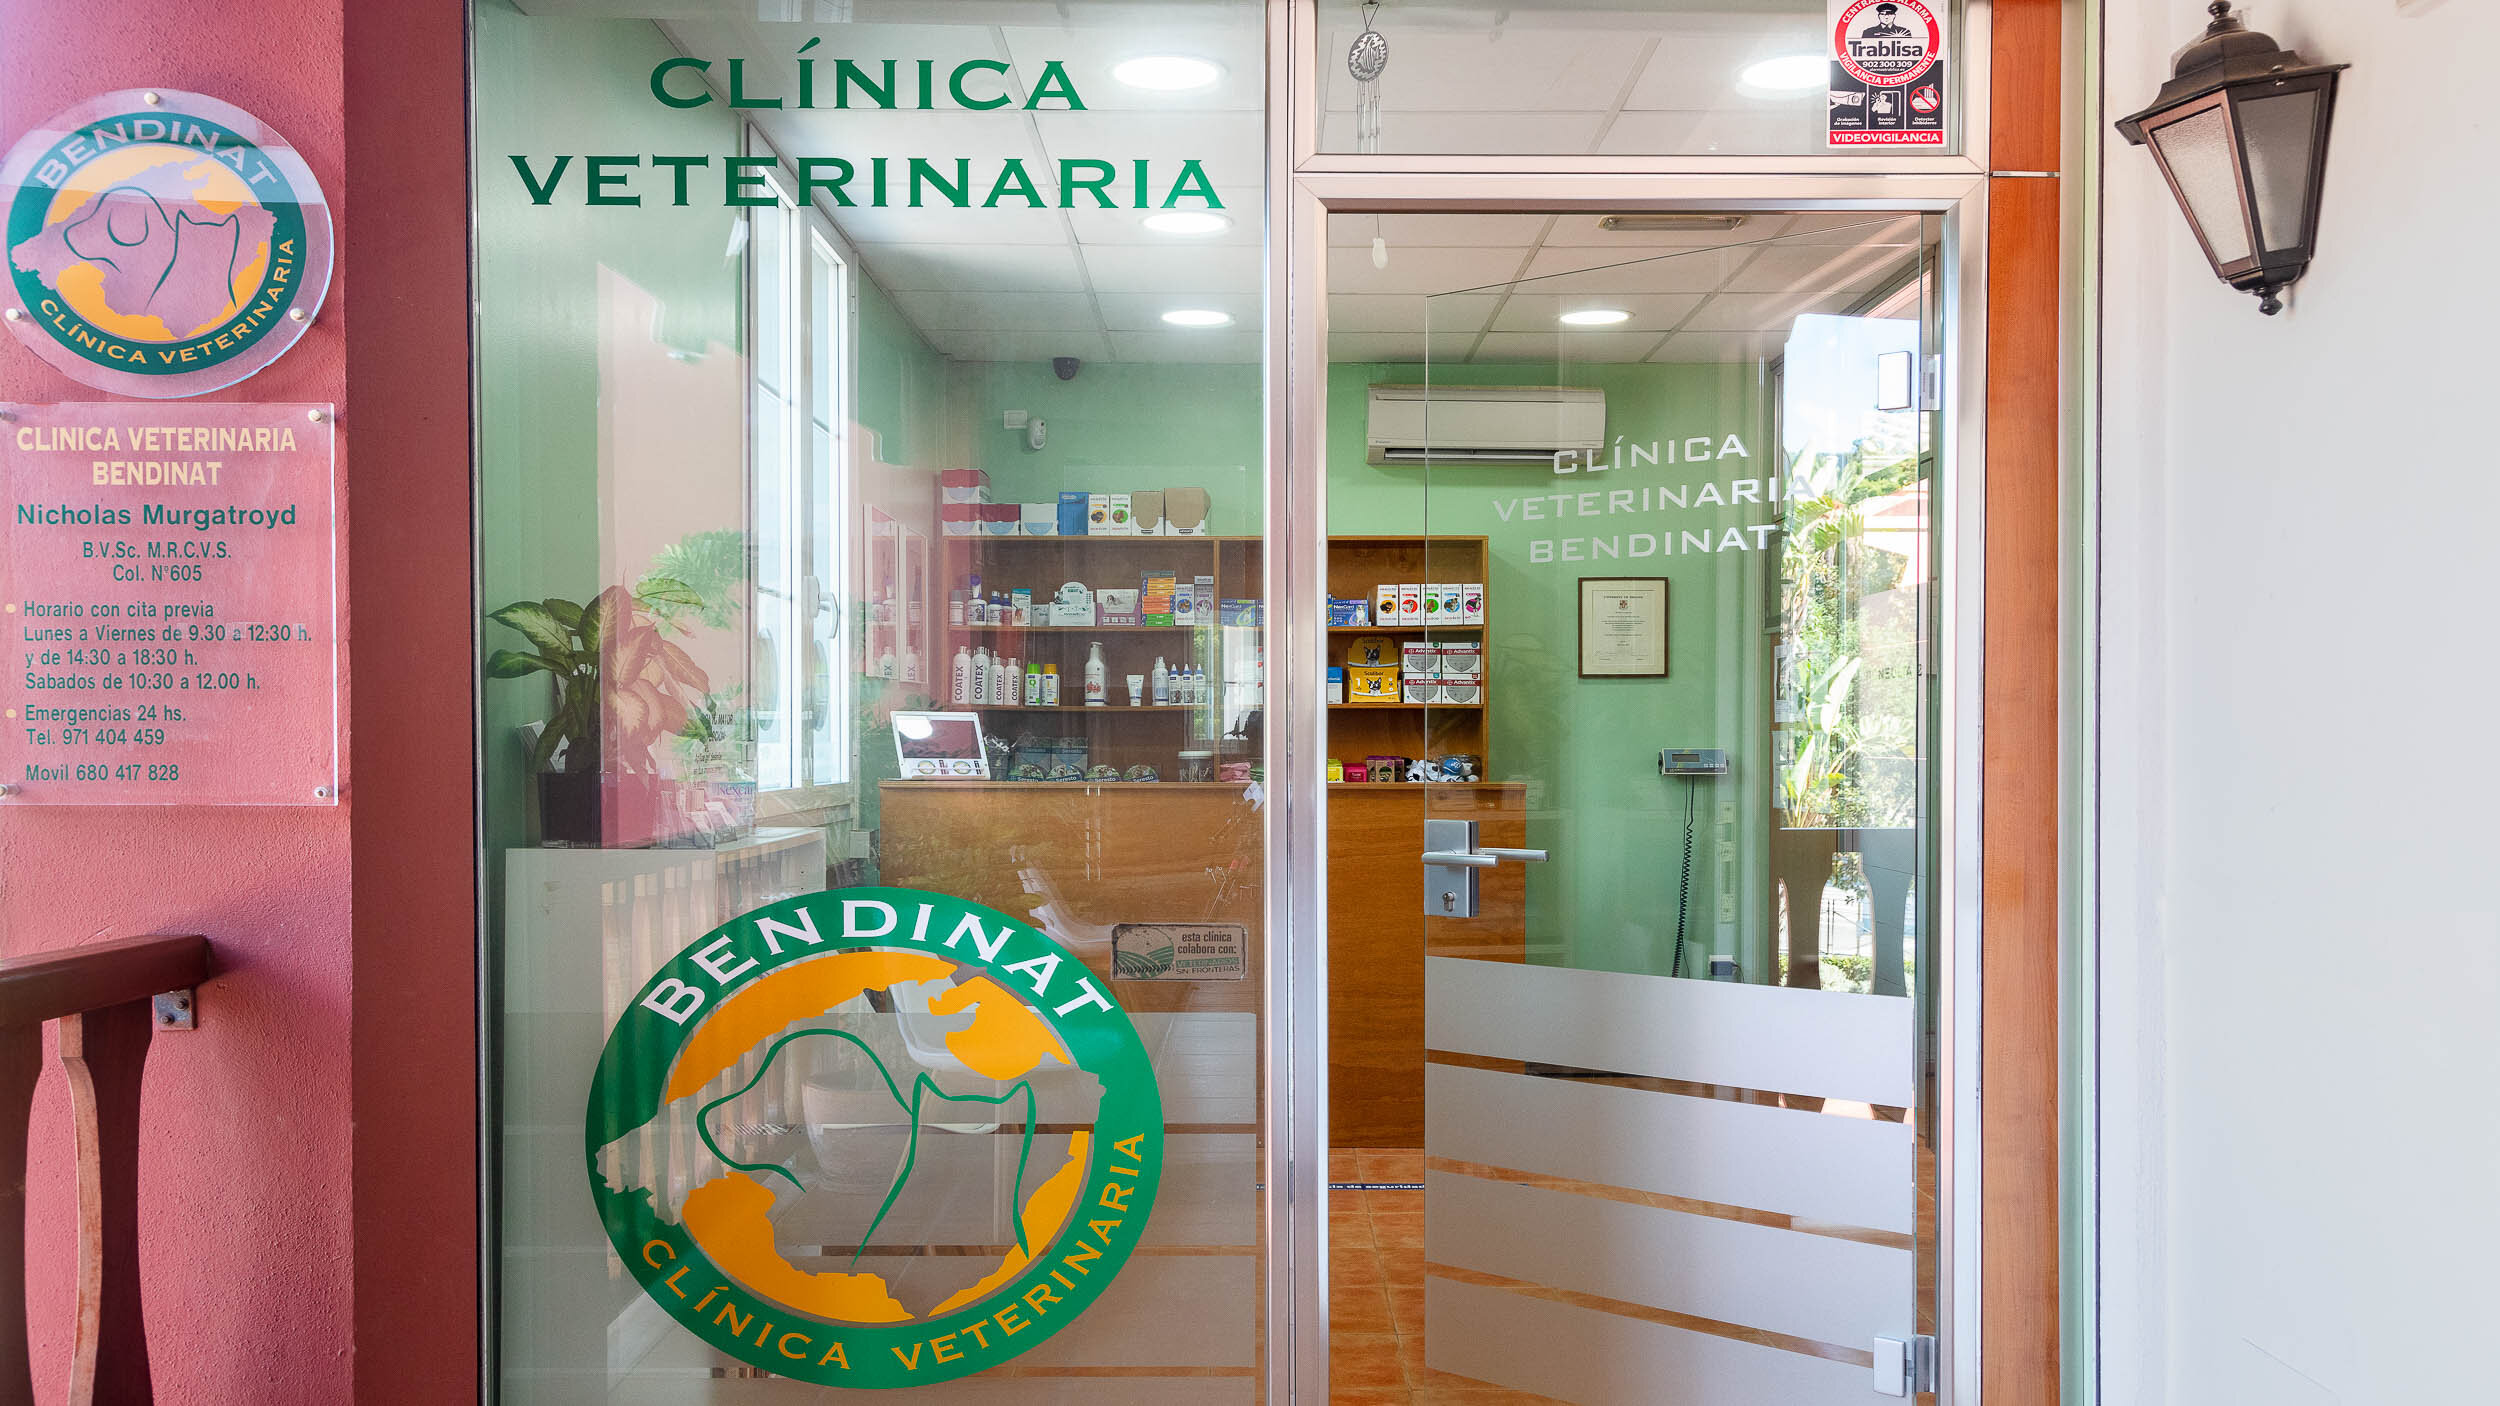 Clinica_Veterinaria_Bendinat_01.jpg